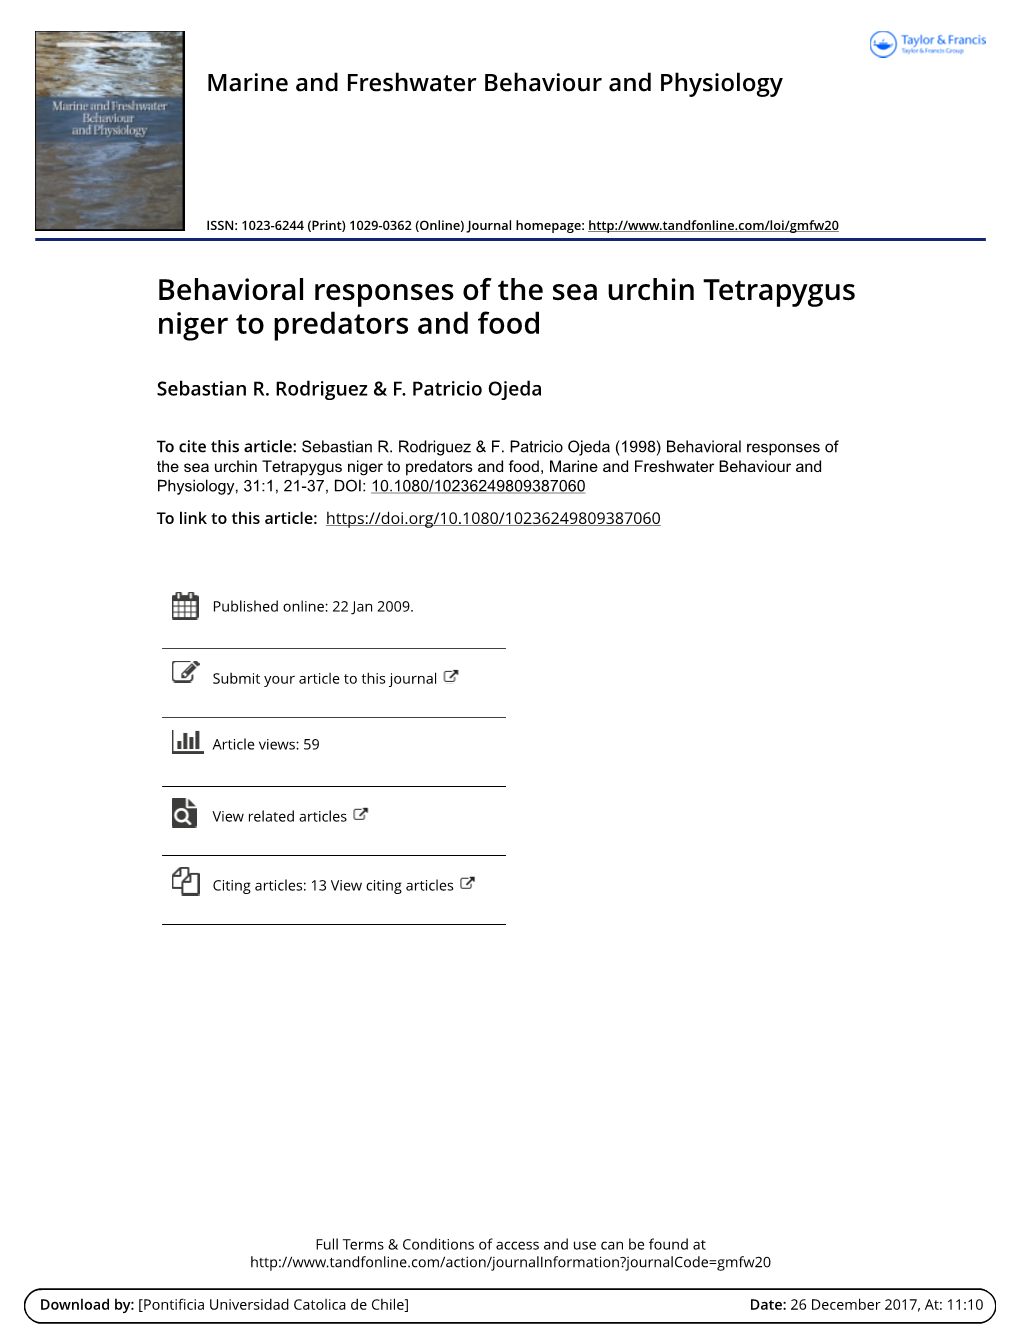 Behavioral Responses of the Sea Urchin Tetrapygus Niger to Predators and Food